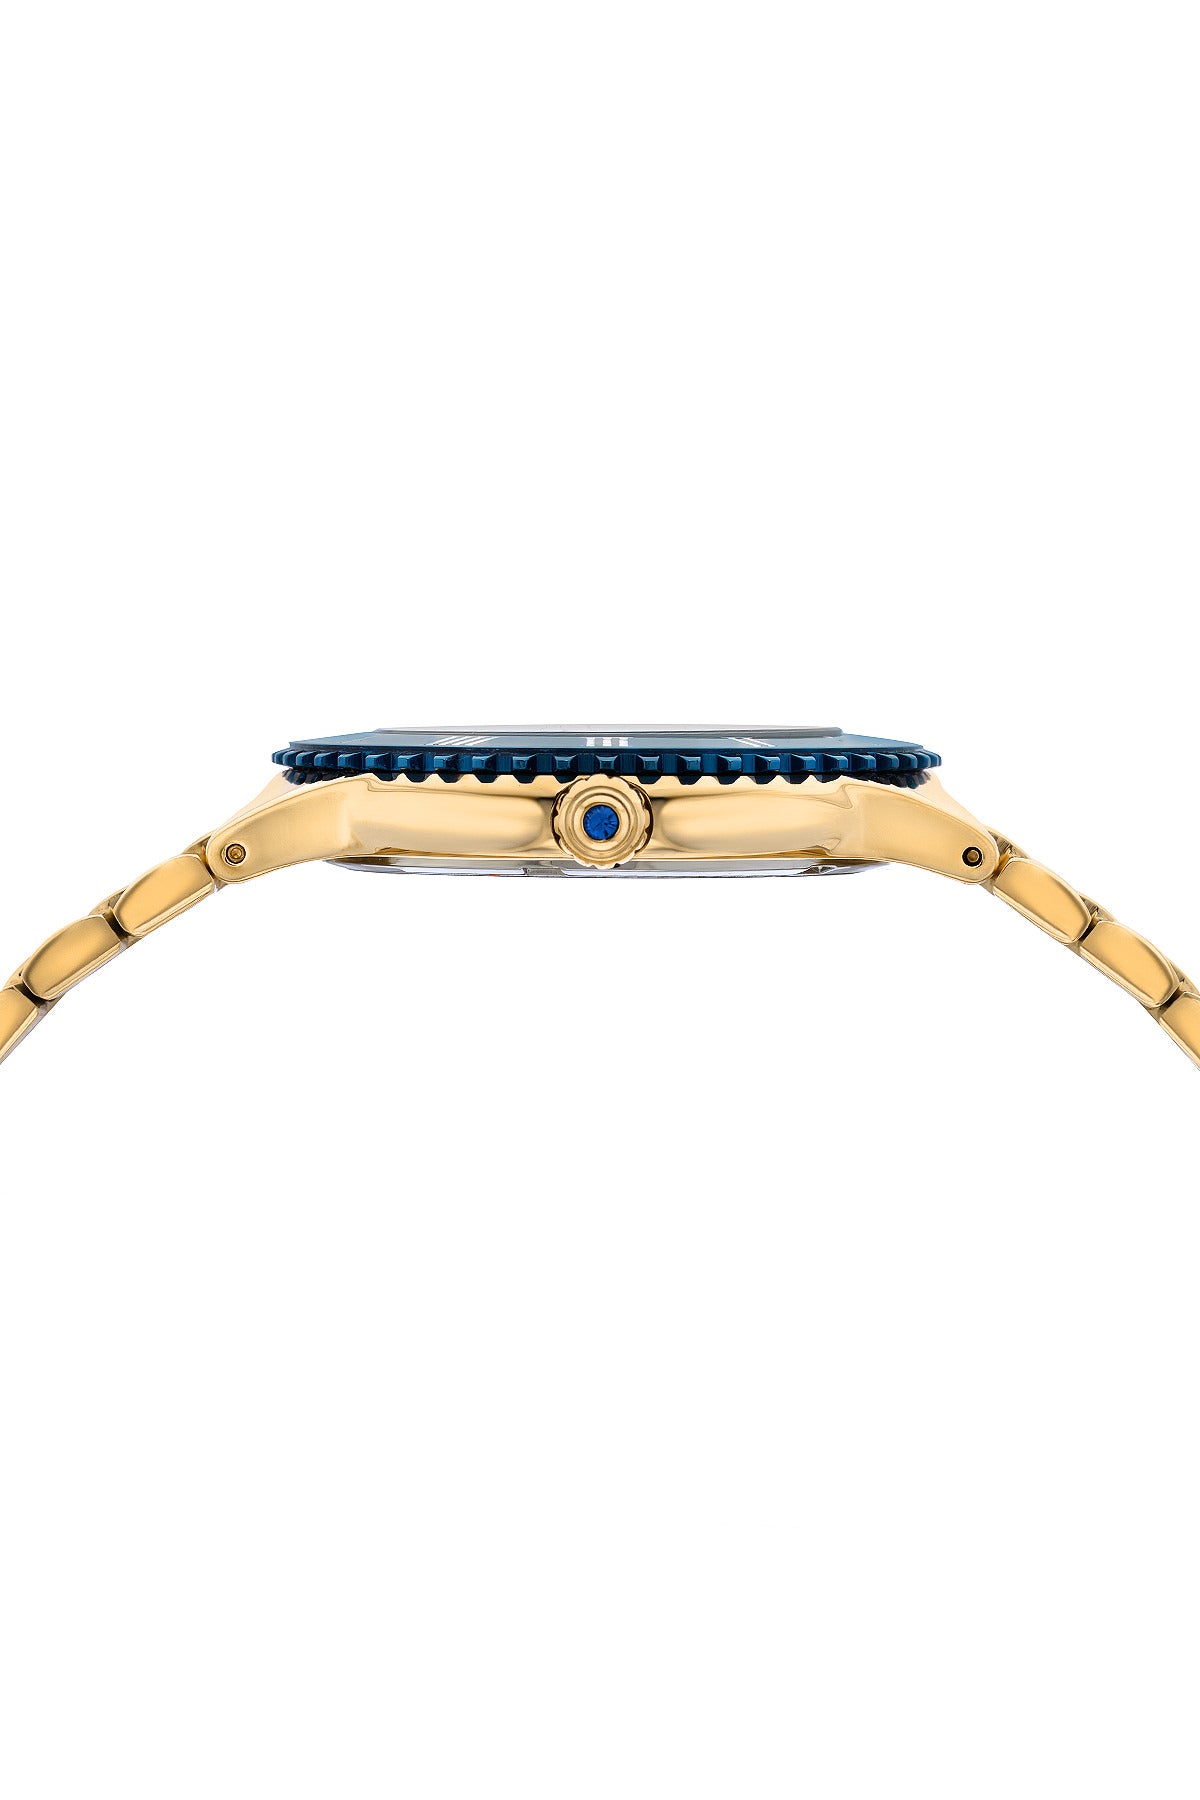 Porsamo Bleu Lexi luxury women's stainless steel watch, gold, blue 942BLES